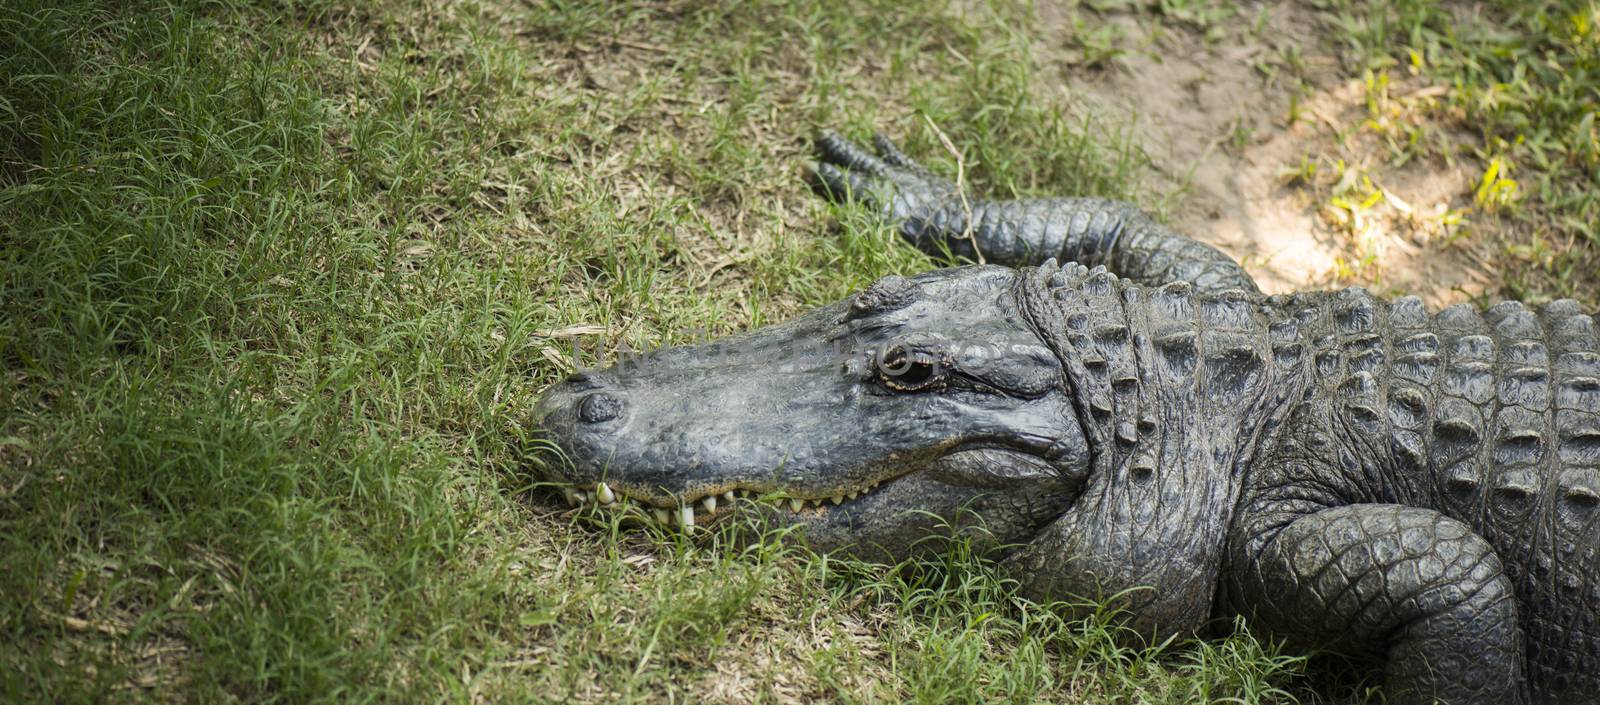 Crocodile outside by artistrobd